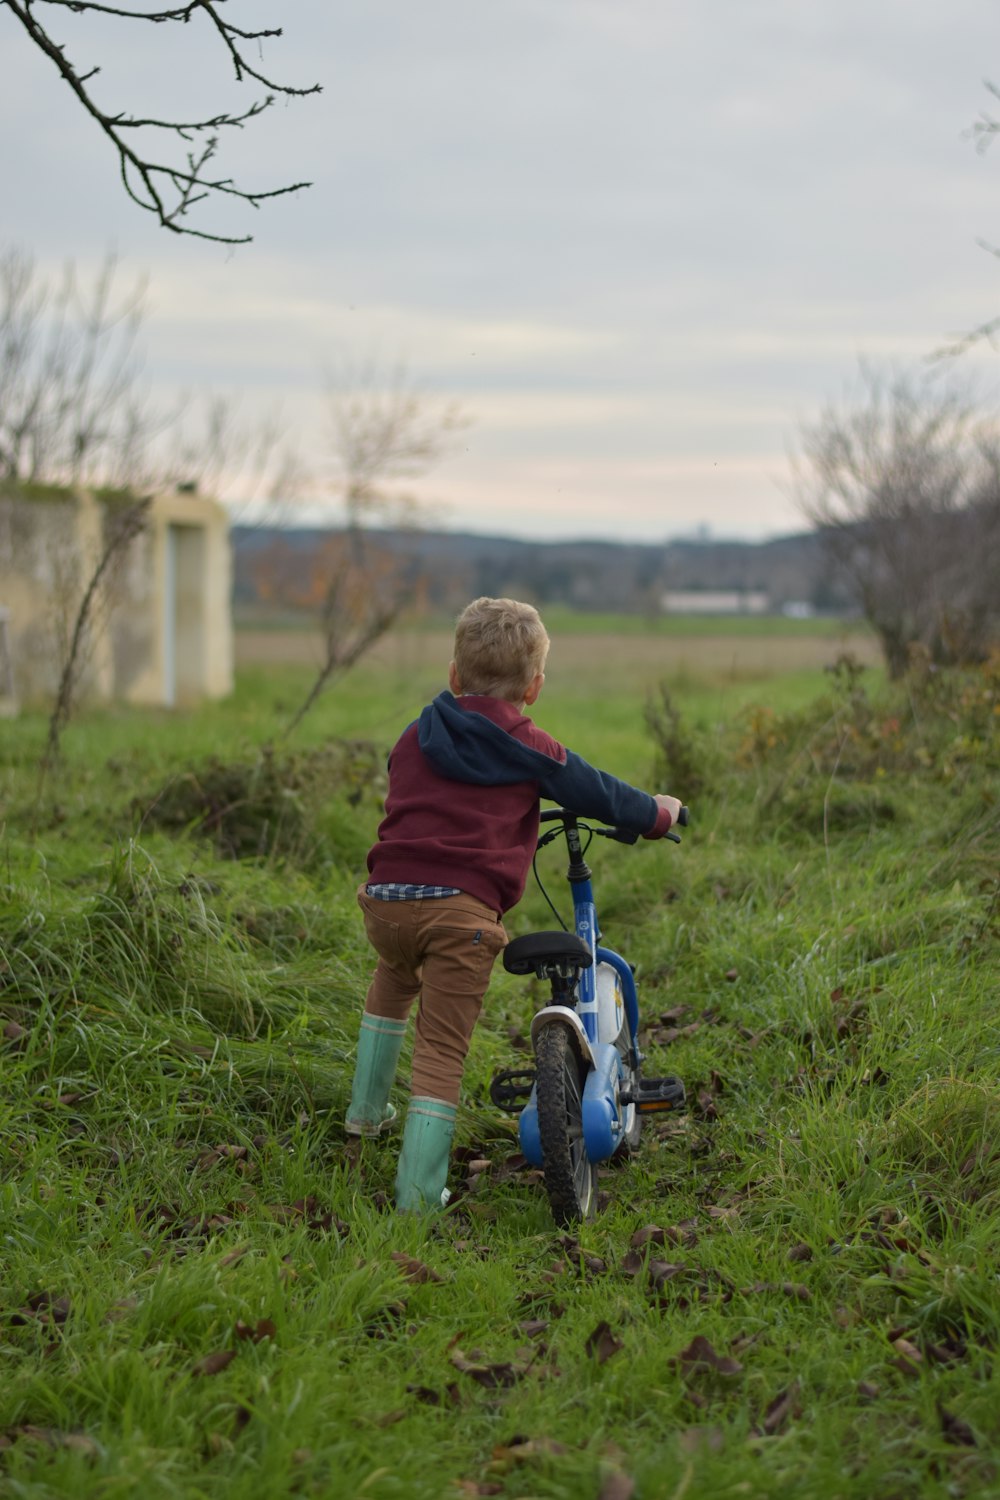 a young boy riding a blue bike on a lush green field